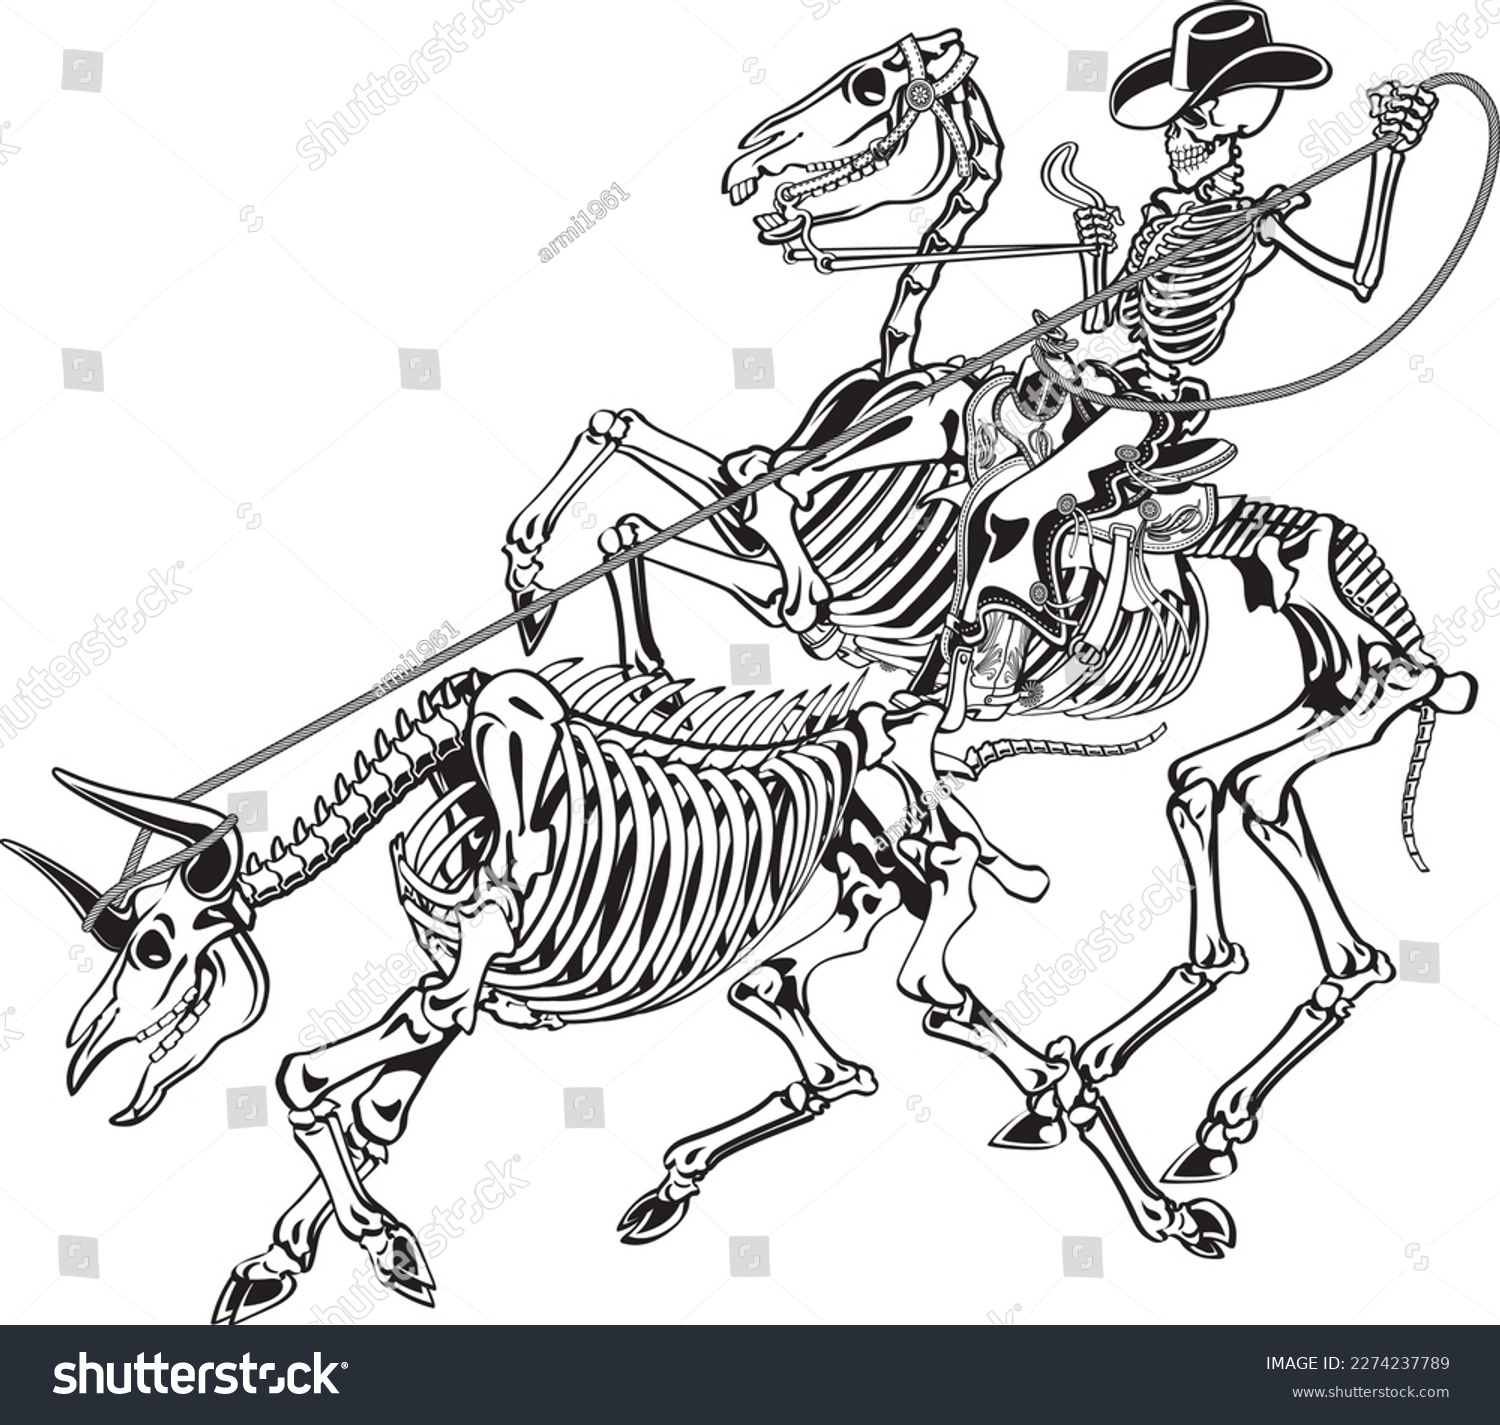 SVG of Skeleton cowboy on skeleton horse catching skeleton bull with lasso svg